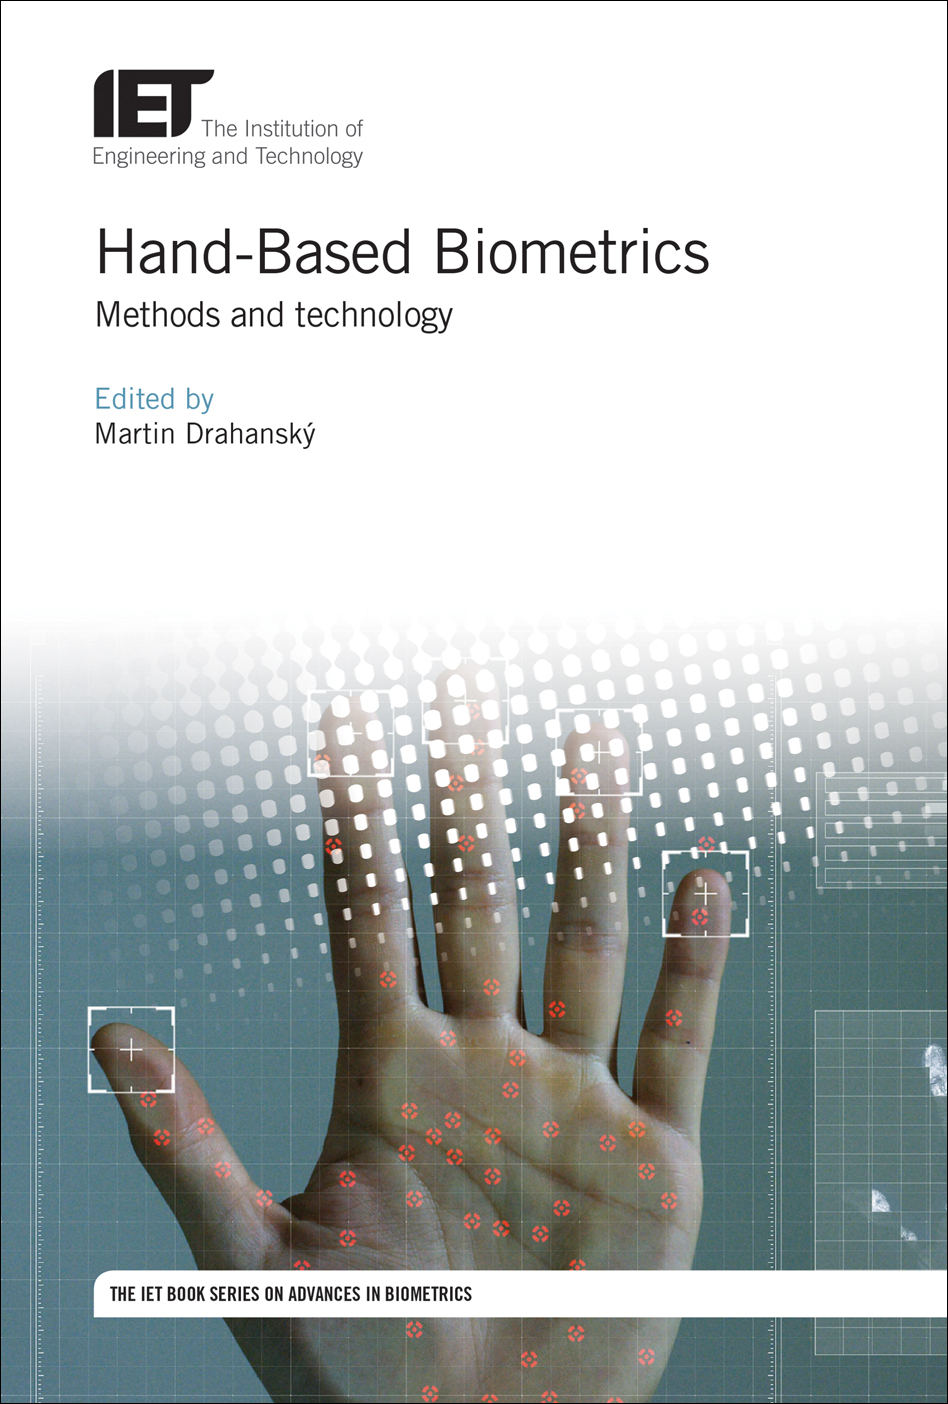 Hand-Based Biometrics, Methods and technology